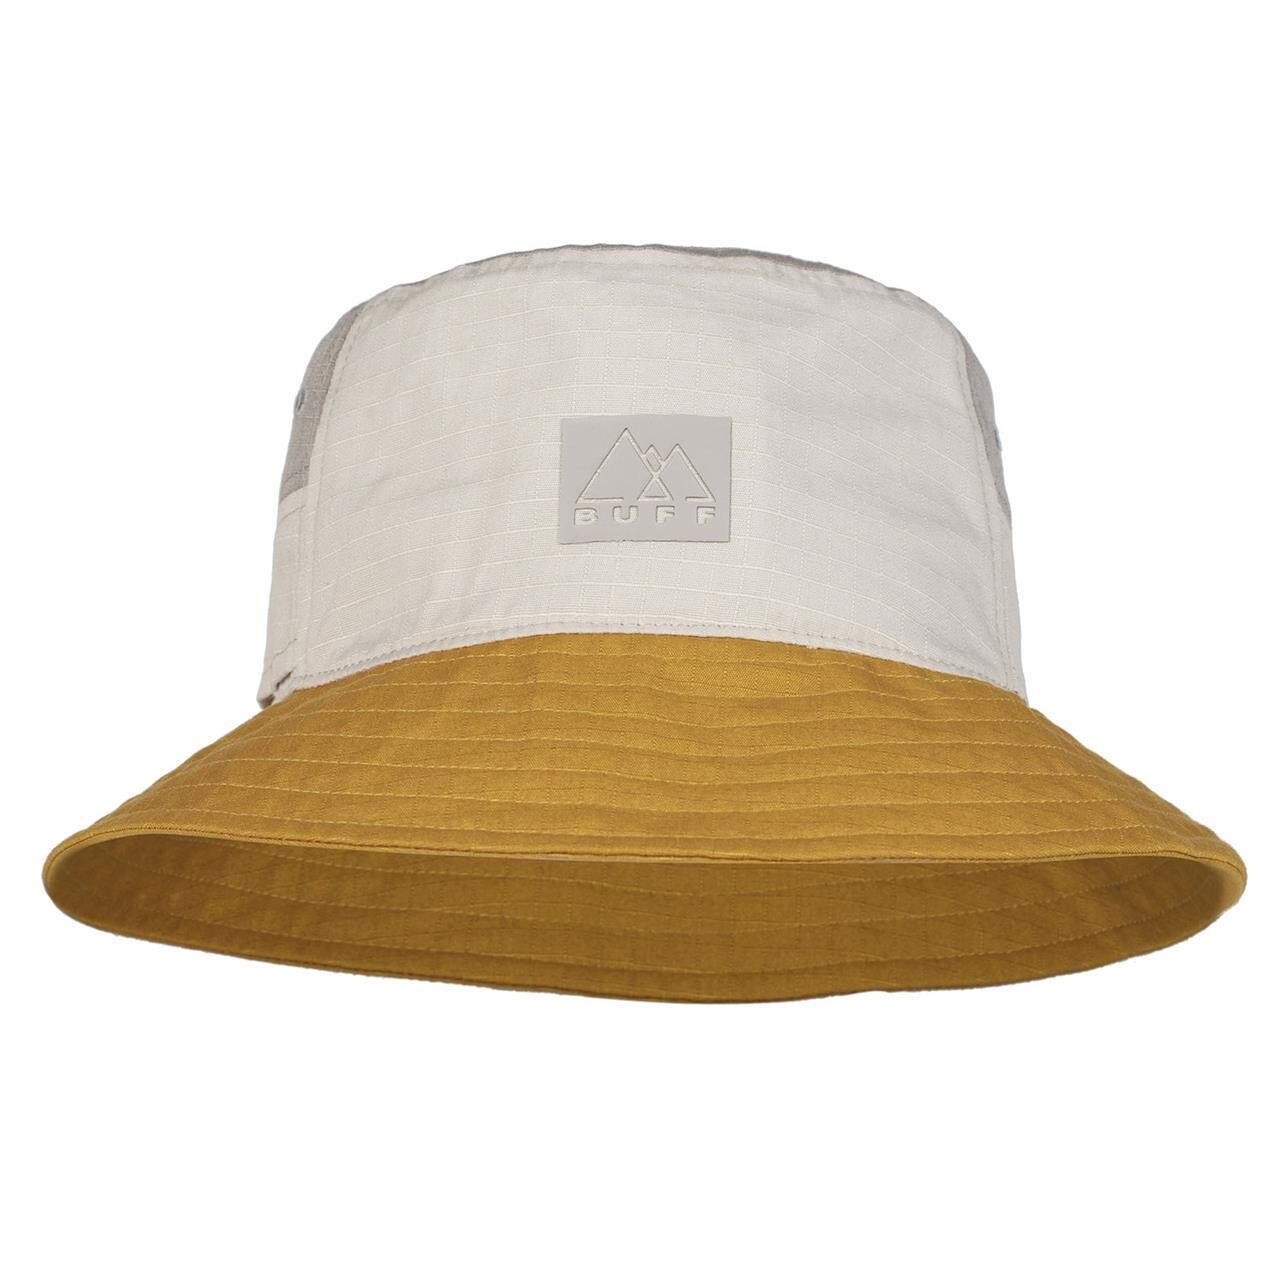 Se Buff Sun Bucket Hat (Gul (HAK OCHER) Large/x-large) hos Friluftsland.dk